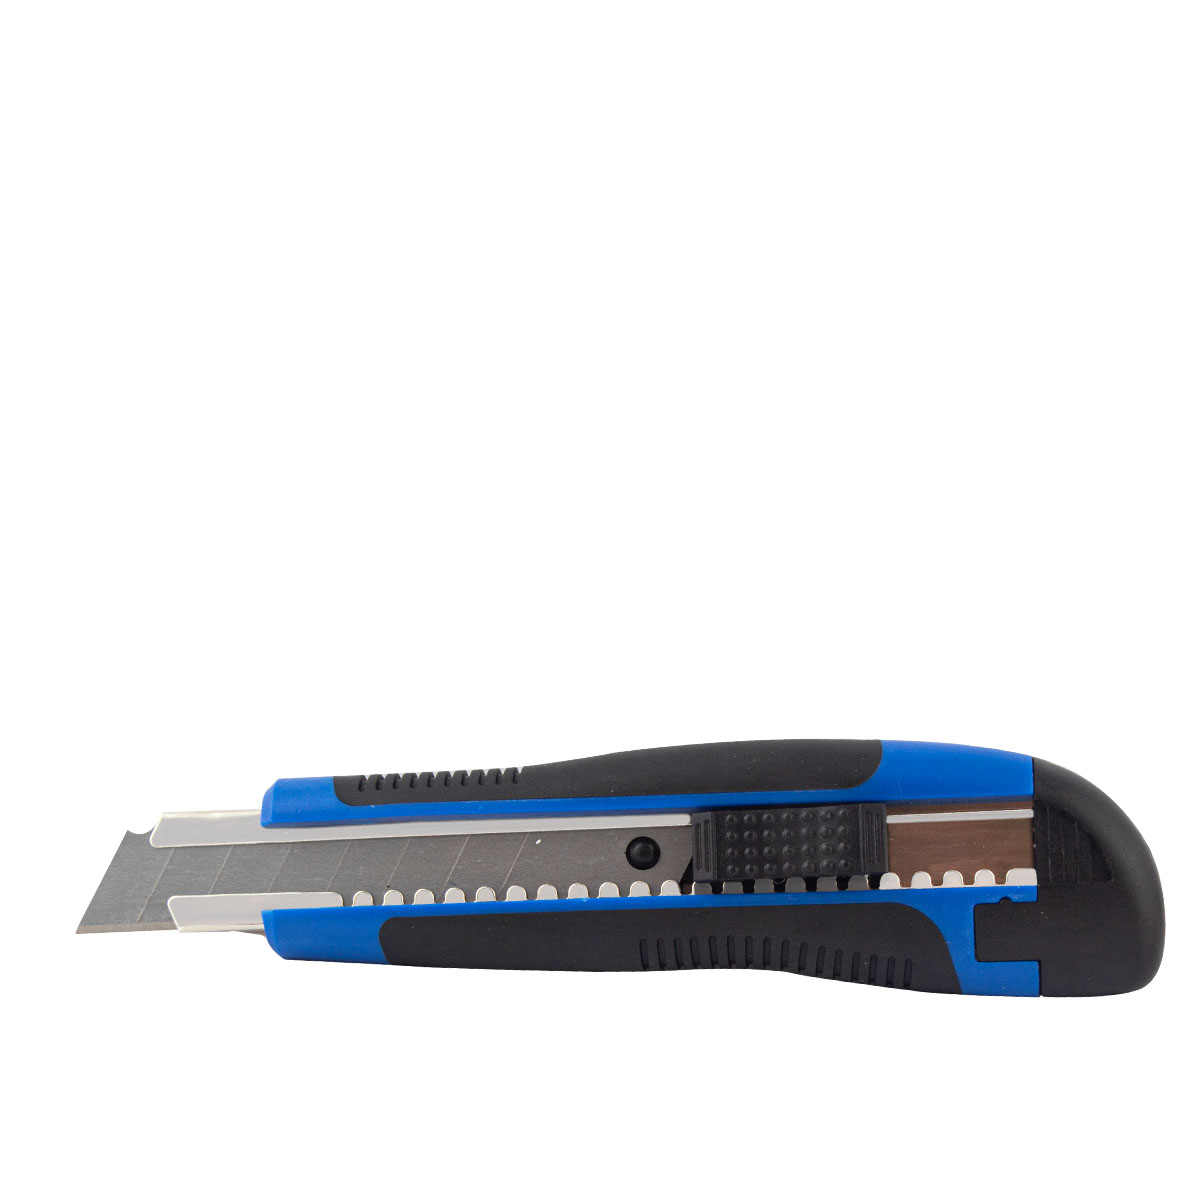 Farbklecks24 Premium Cuttermesser 2K Griff 18mm Klinge